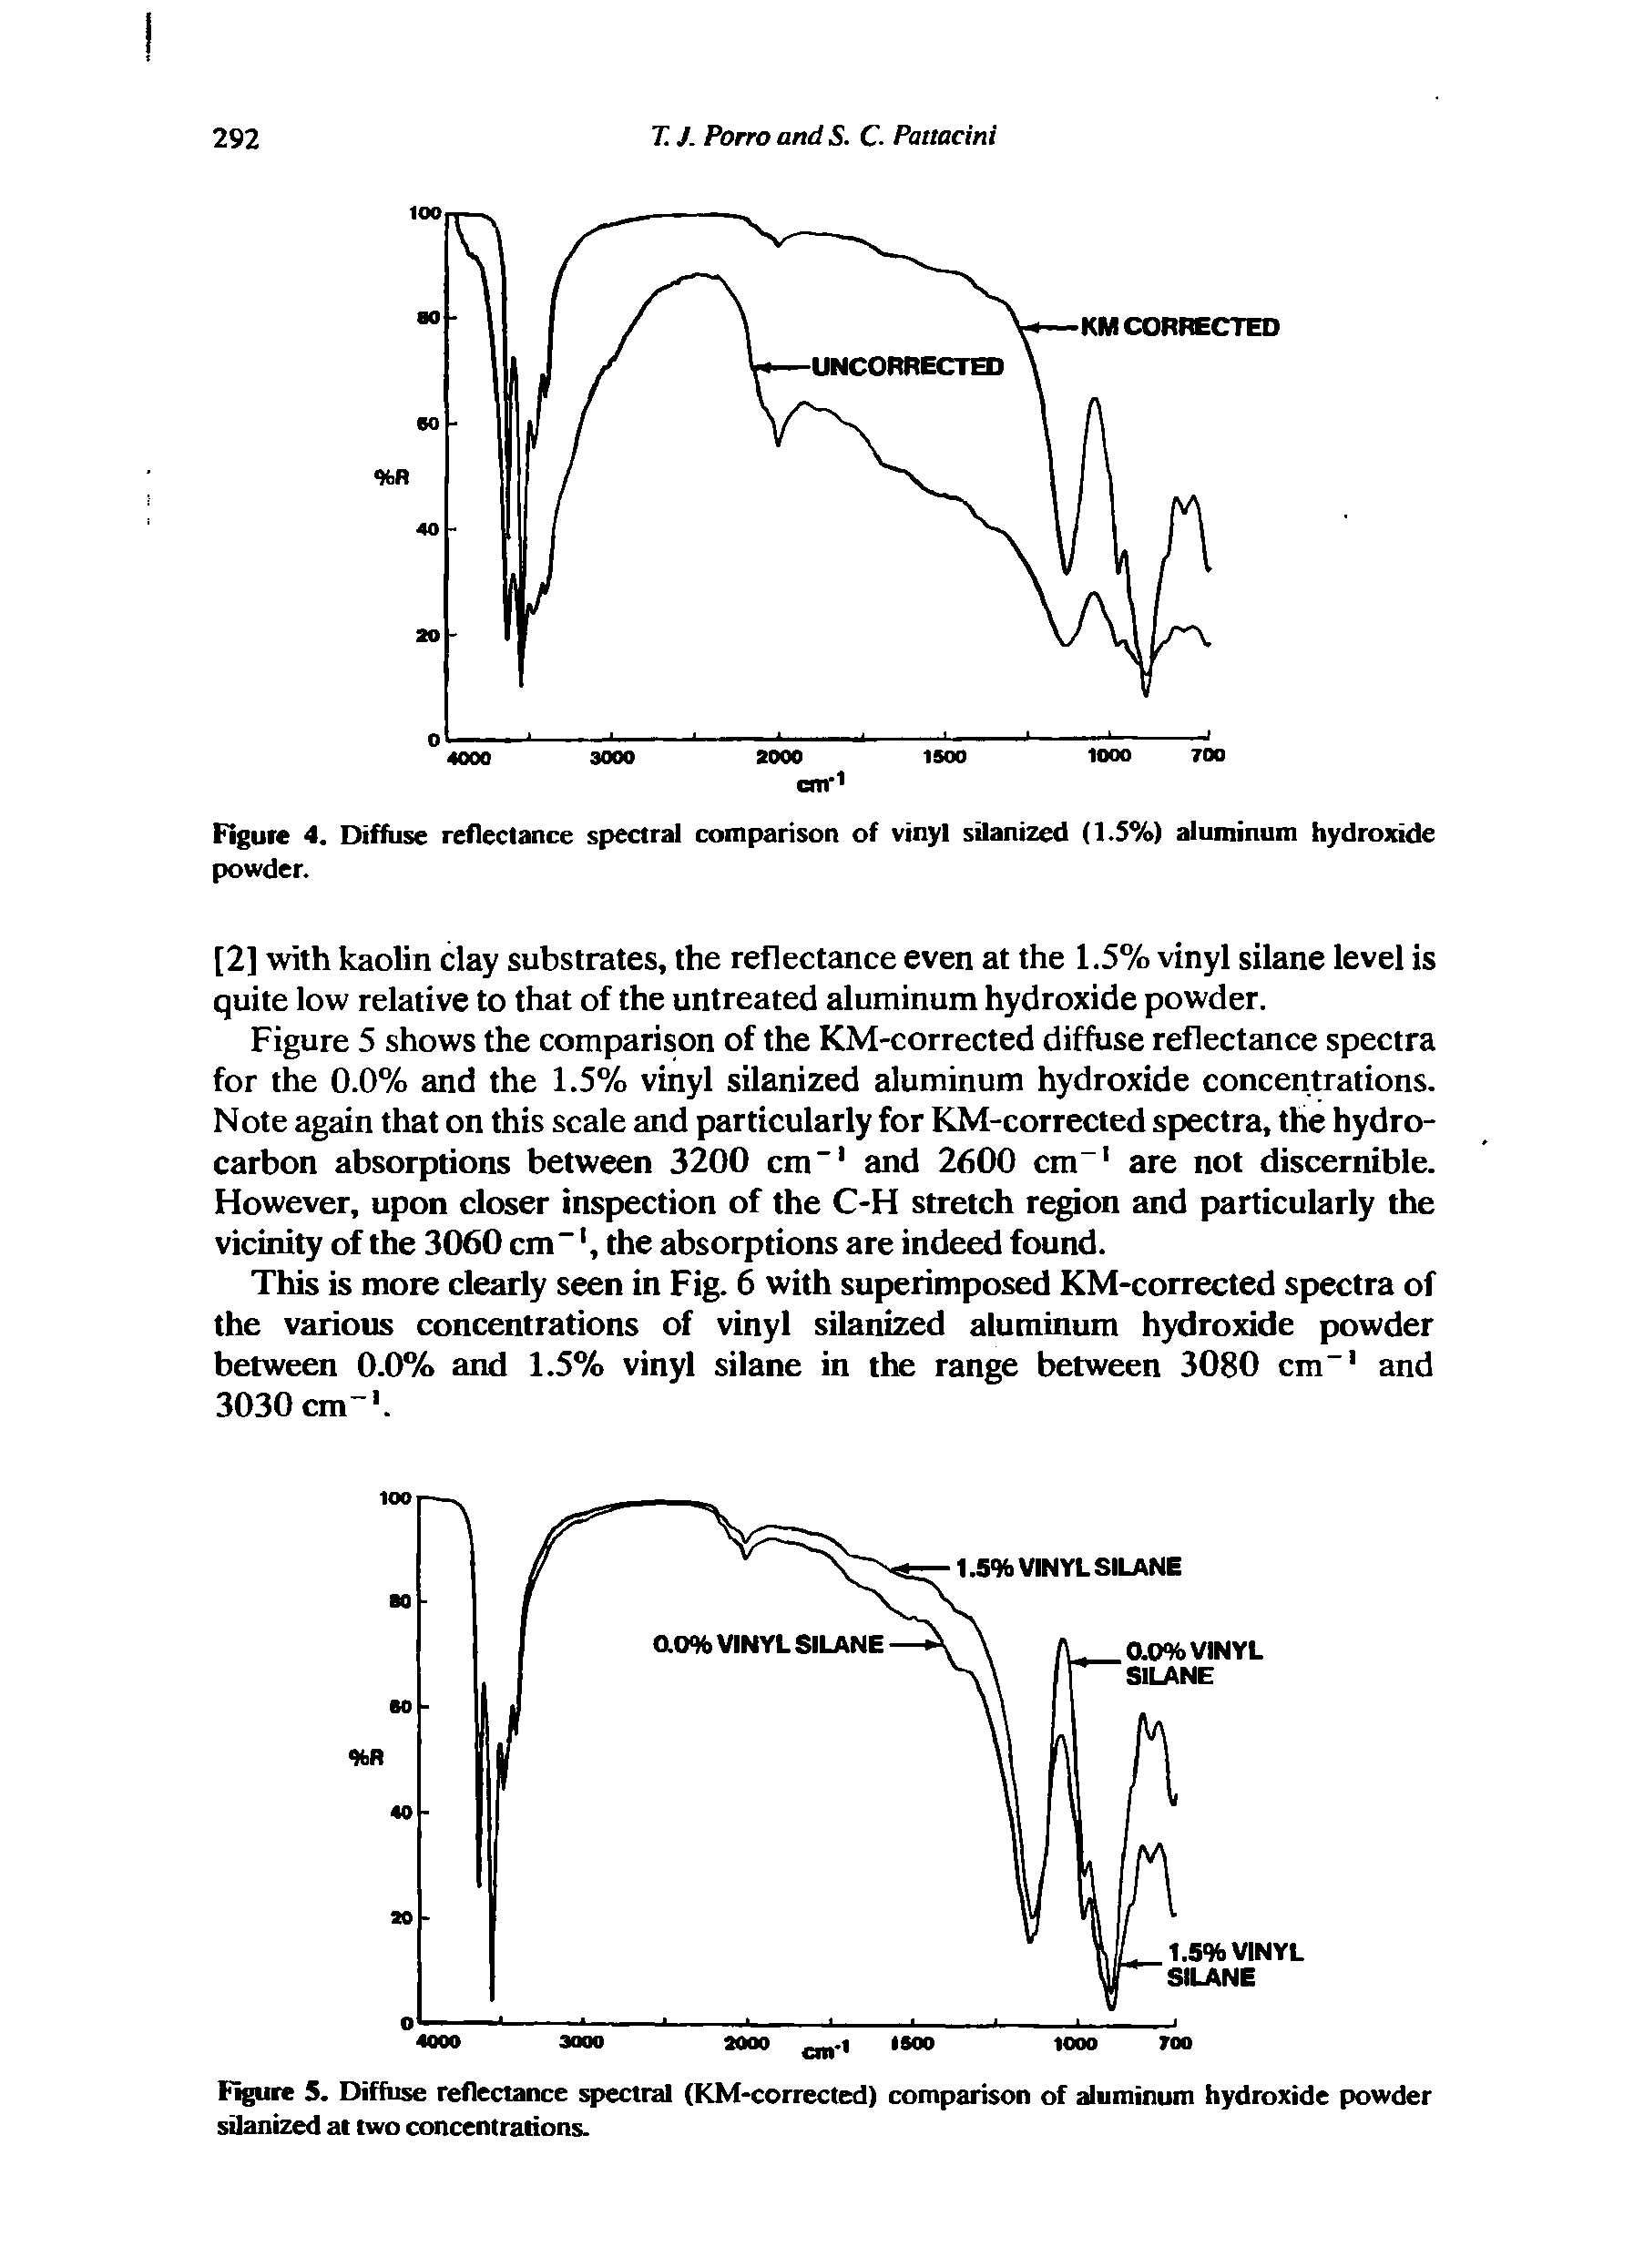 Figure 4. Diffuse reflectance spectral comparison of vinyl silanized (1.5%) aluminum hydroxide powder.